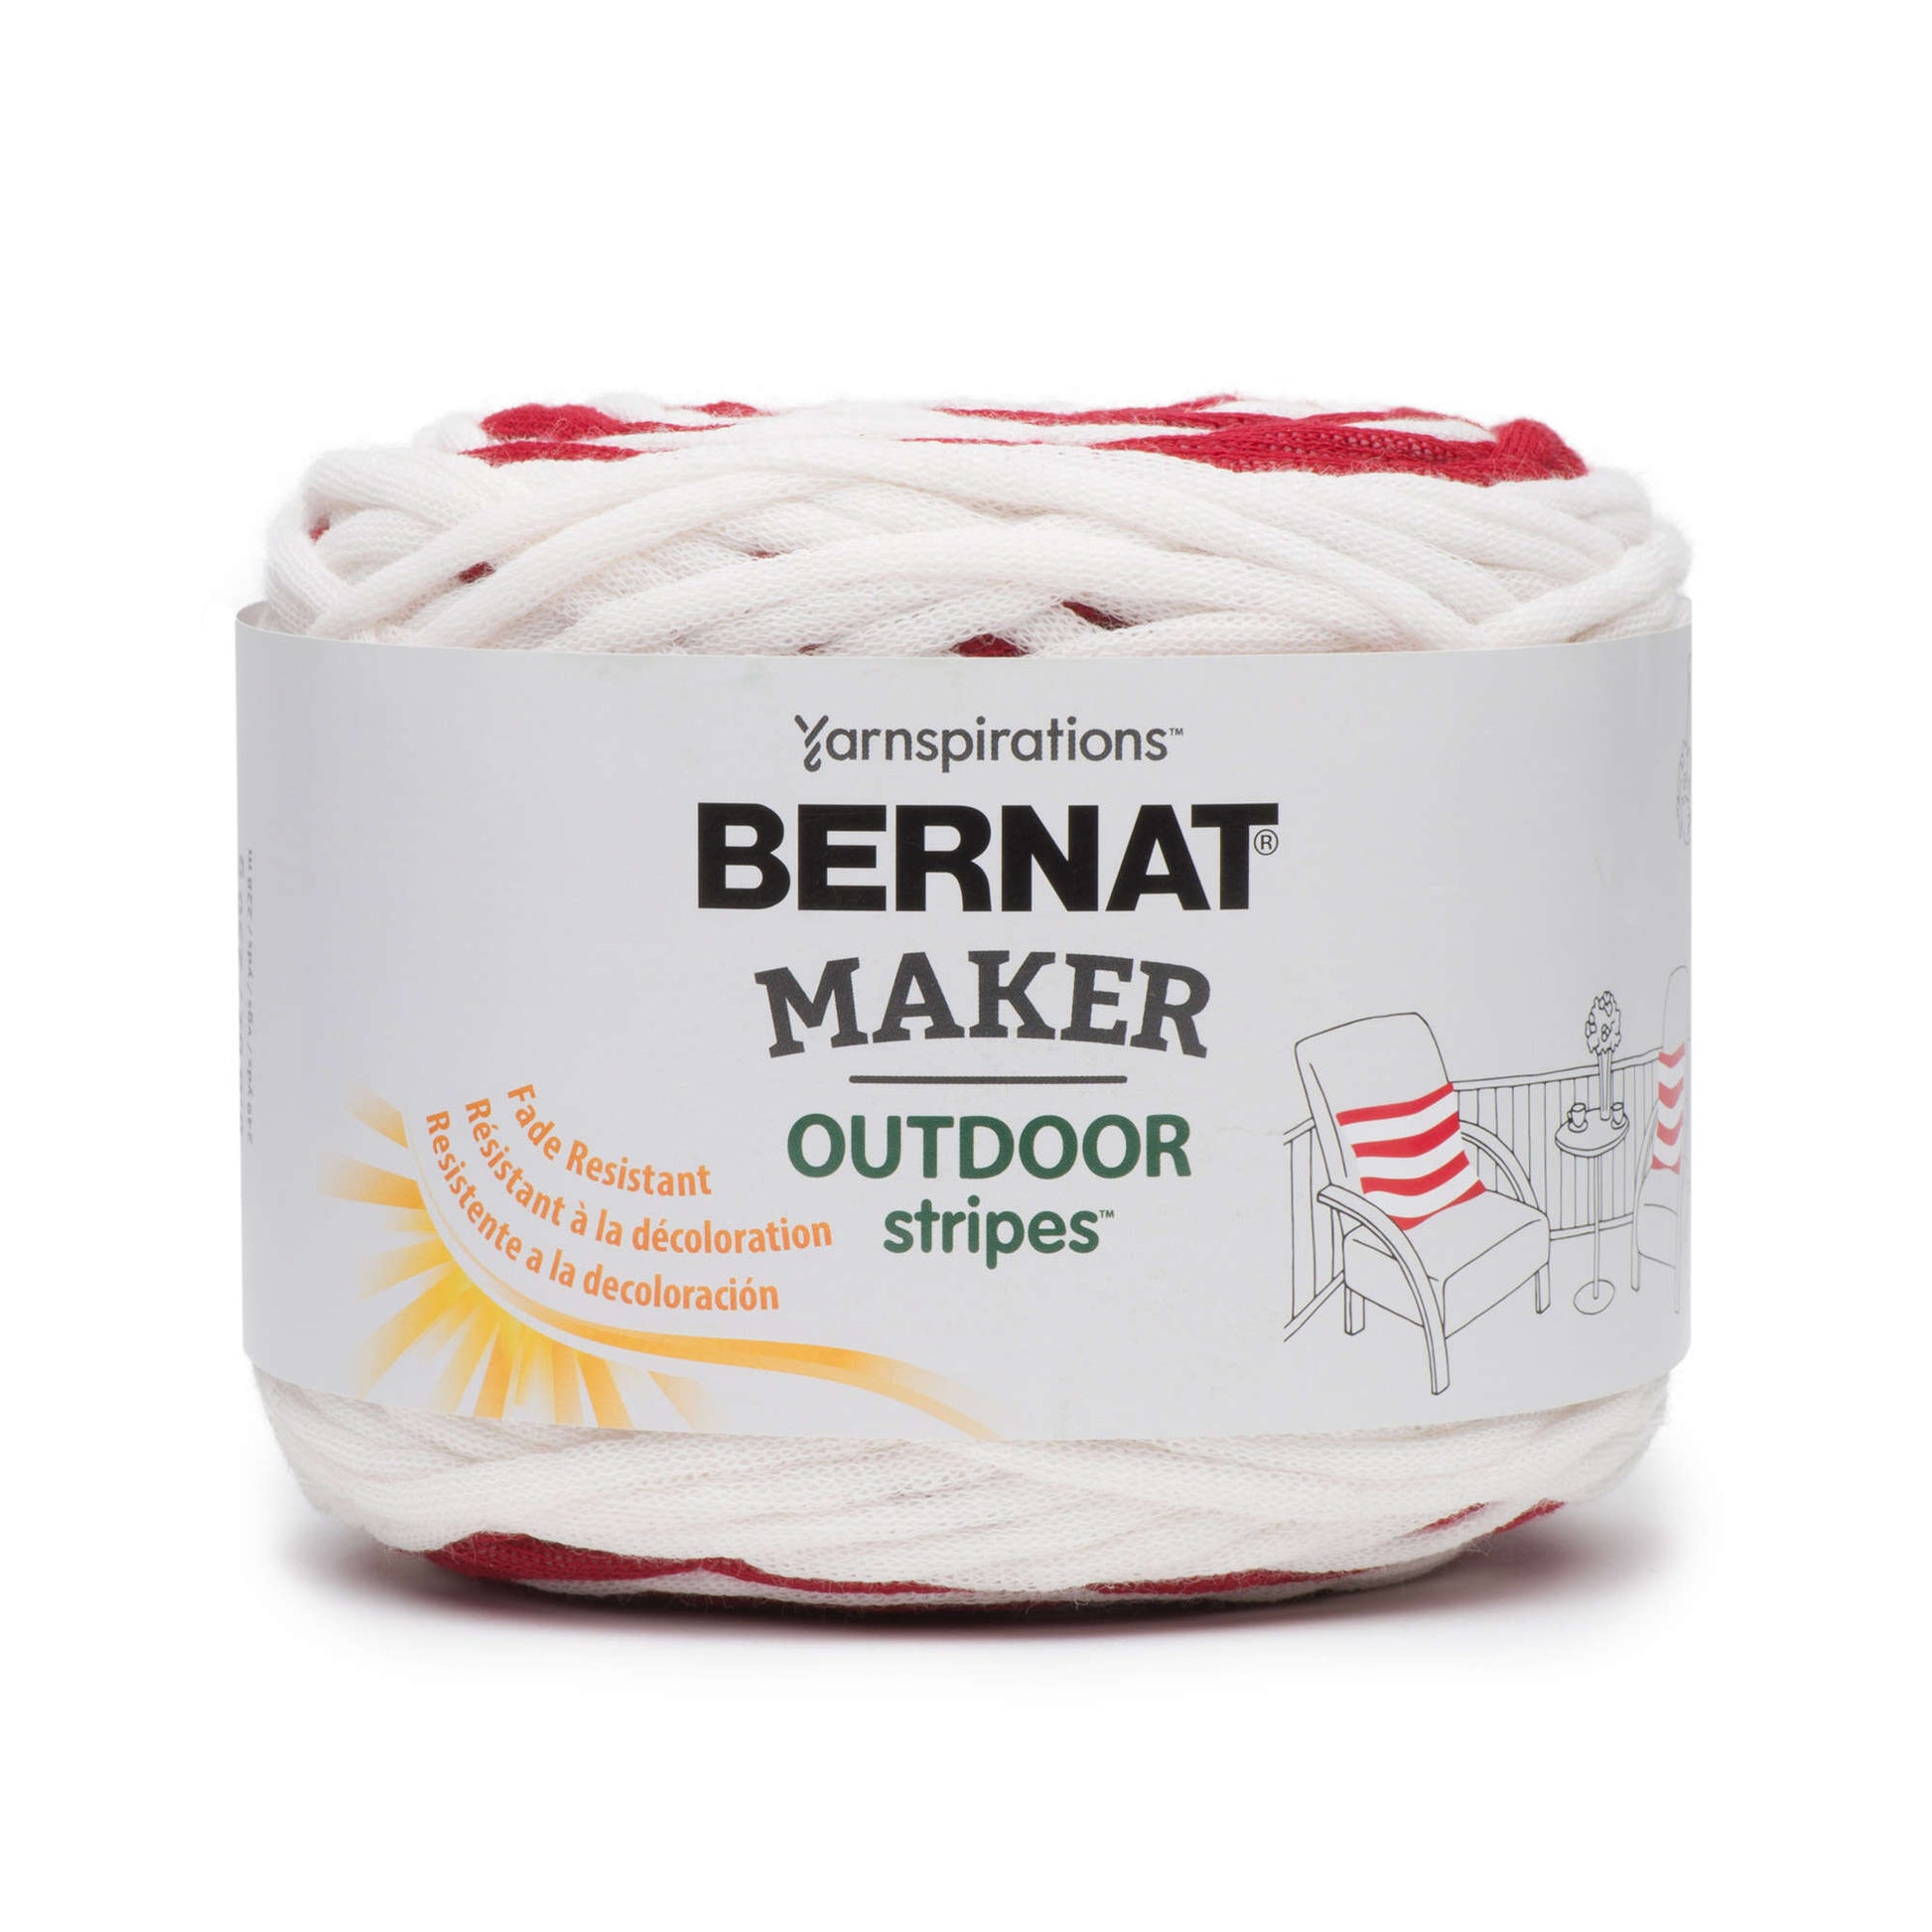 Bernat Maker Home Outdoor Stripes Yarn - Discontinued Fresh Red Stripe